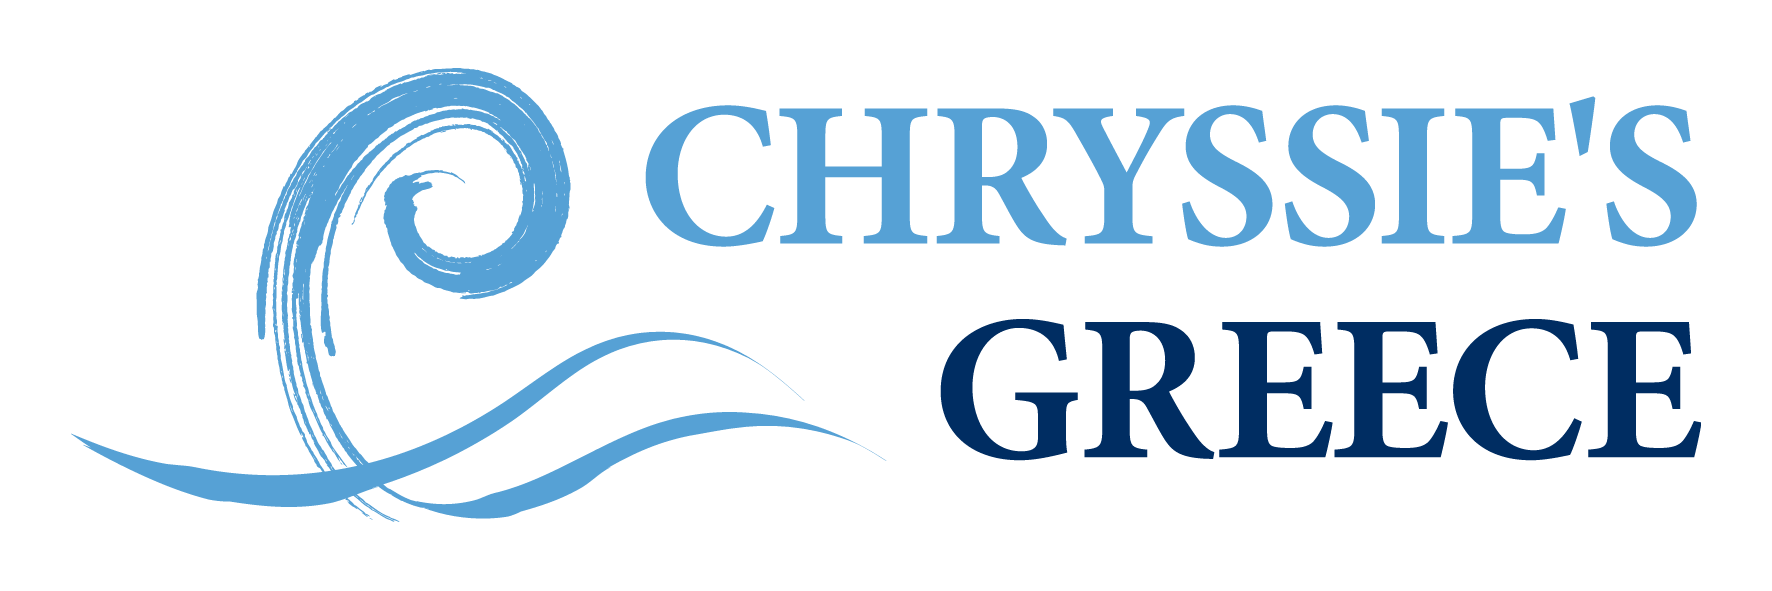 Chryssie's Greece logo